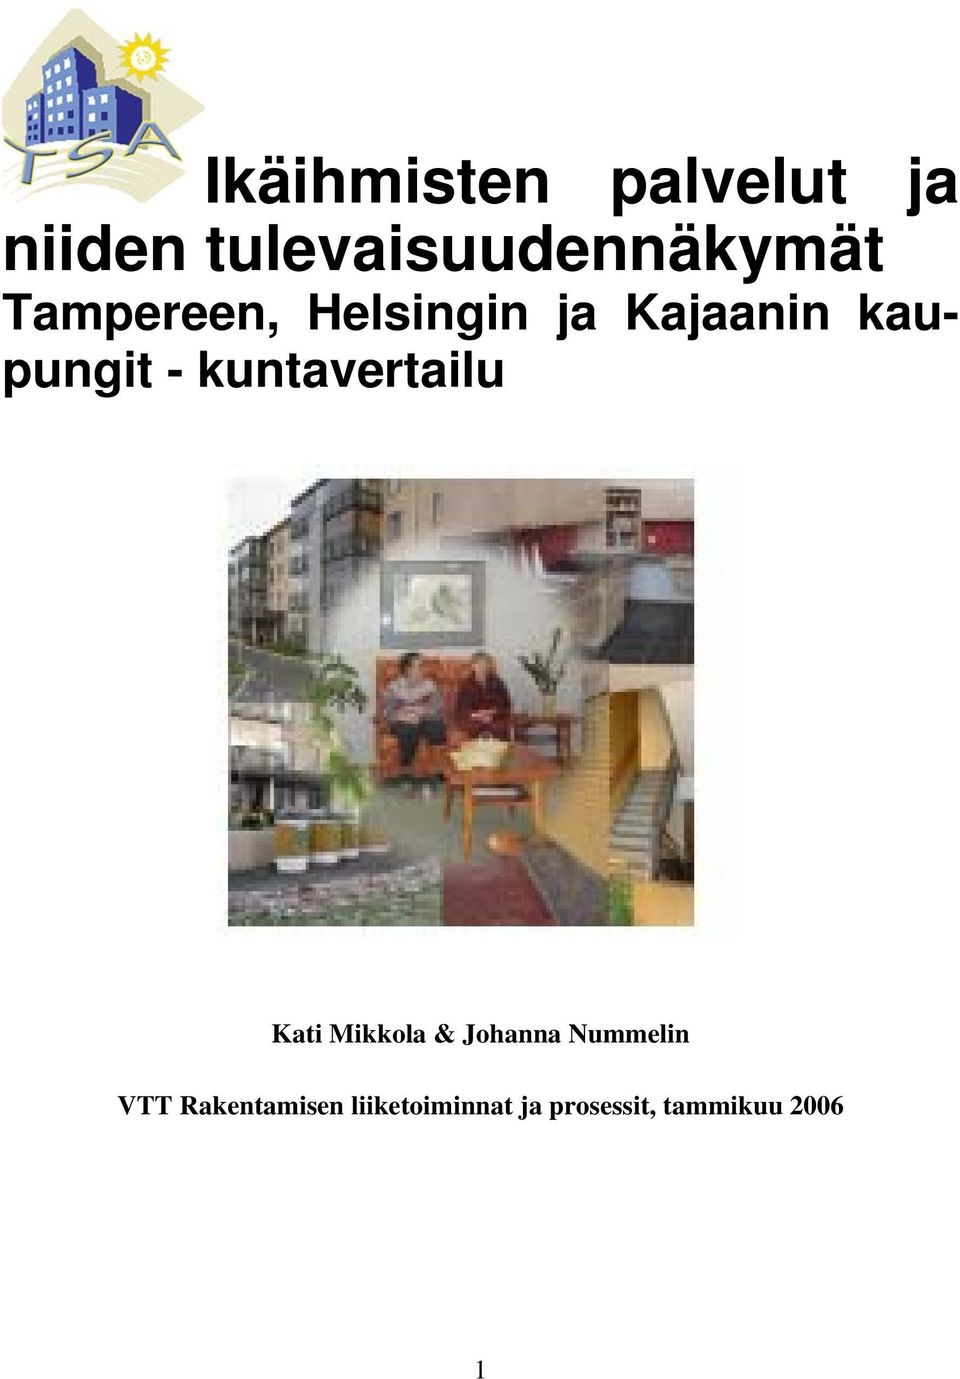 Kajaanin kaupungit - kuntavertailu Kati Mikkola &